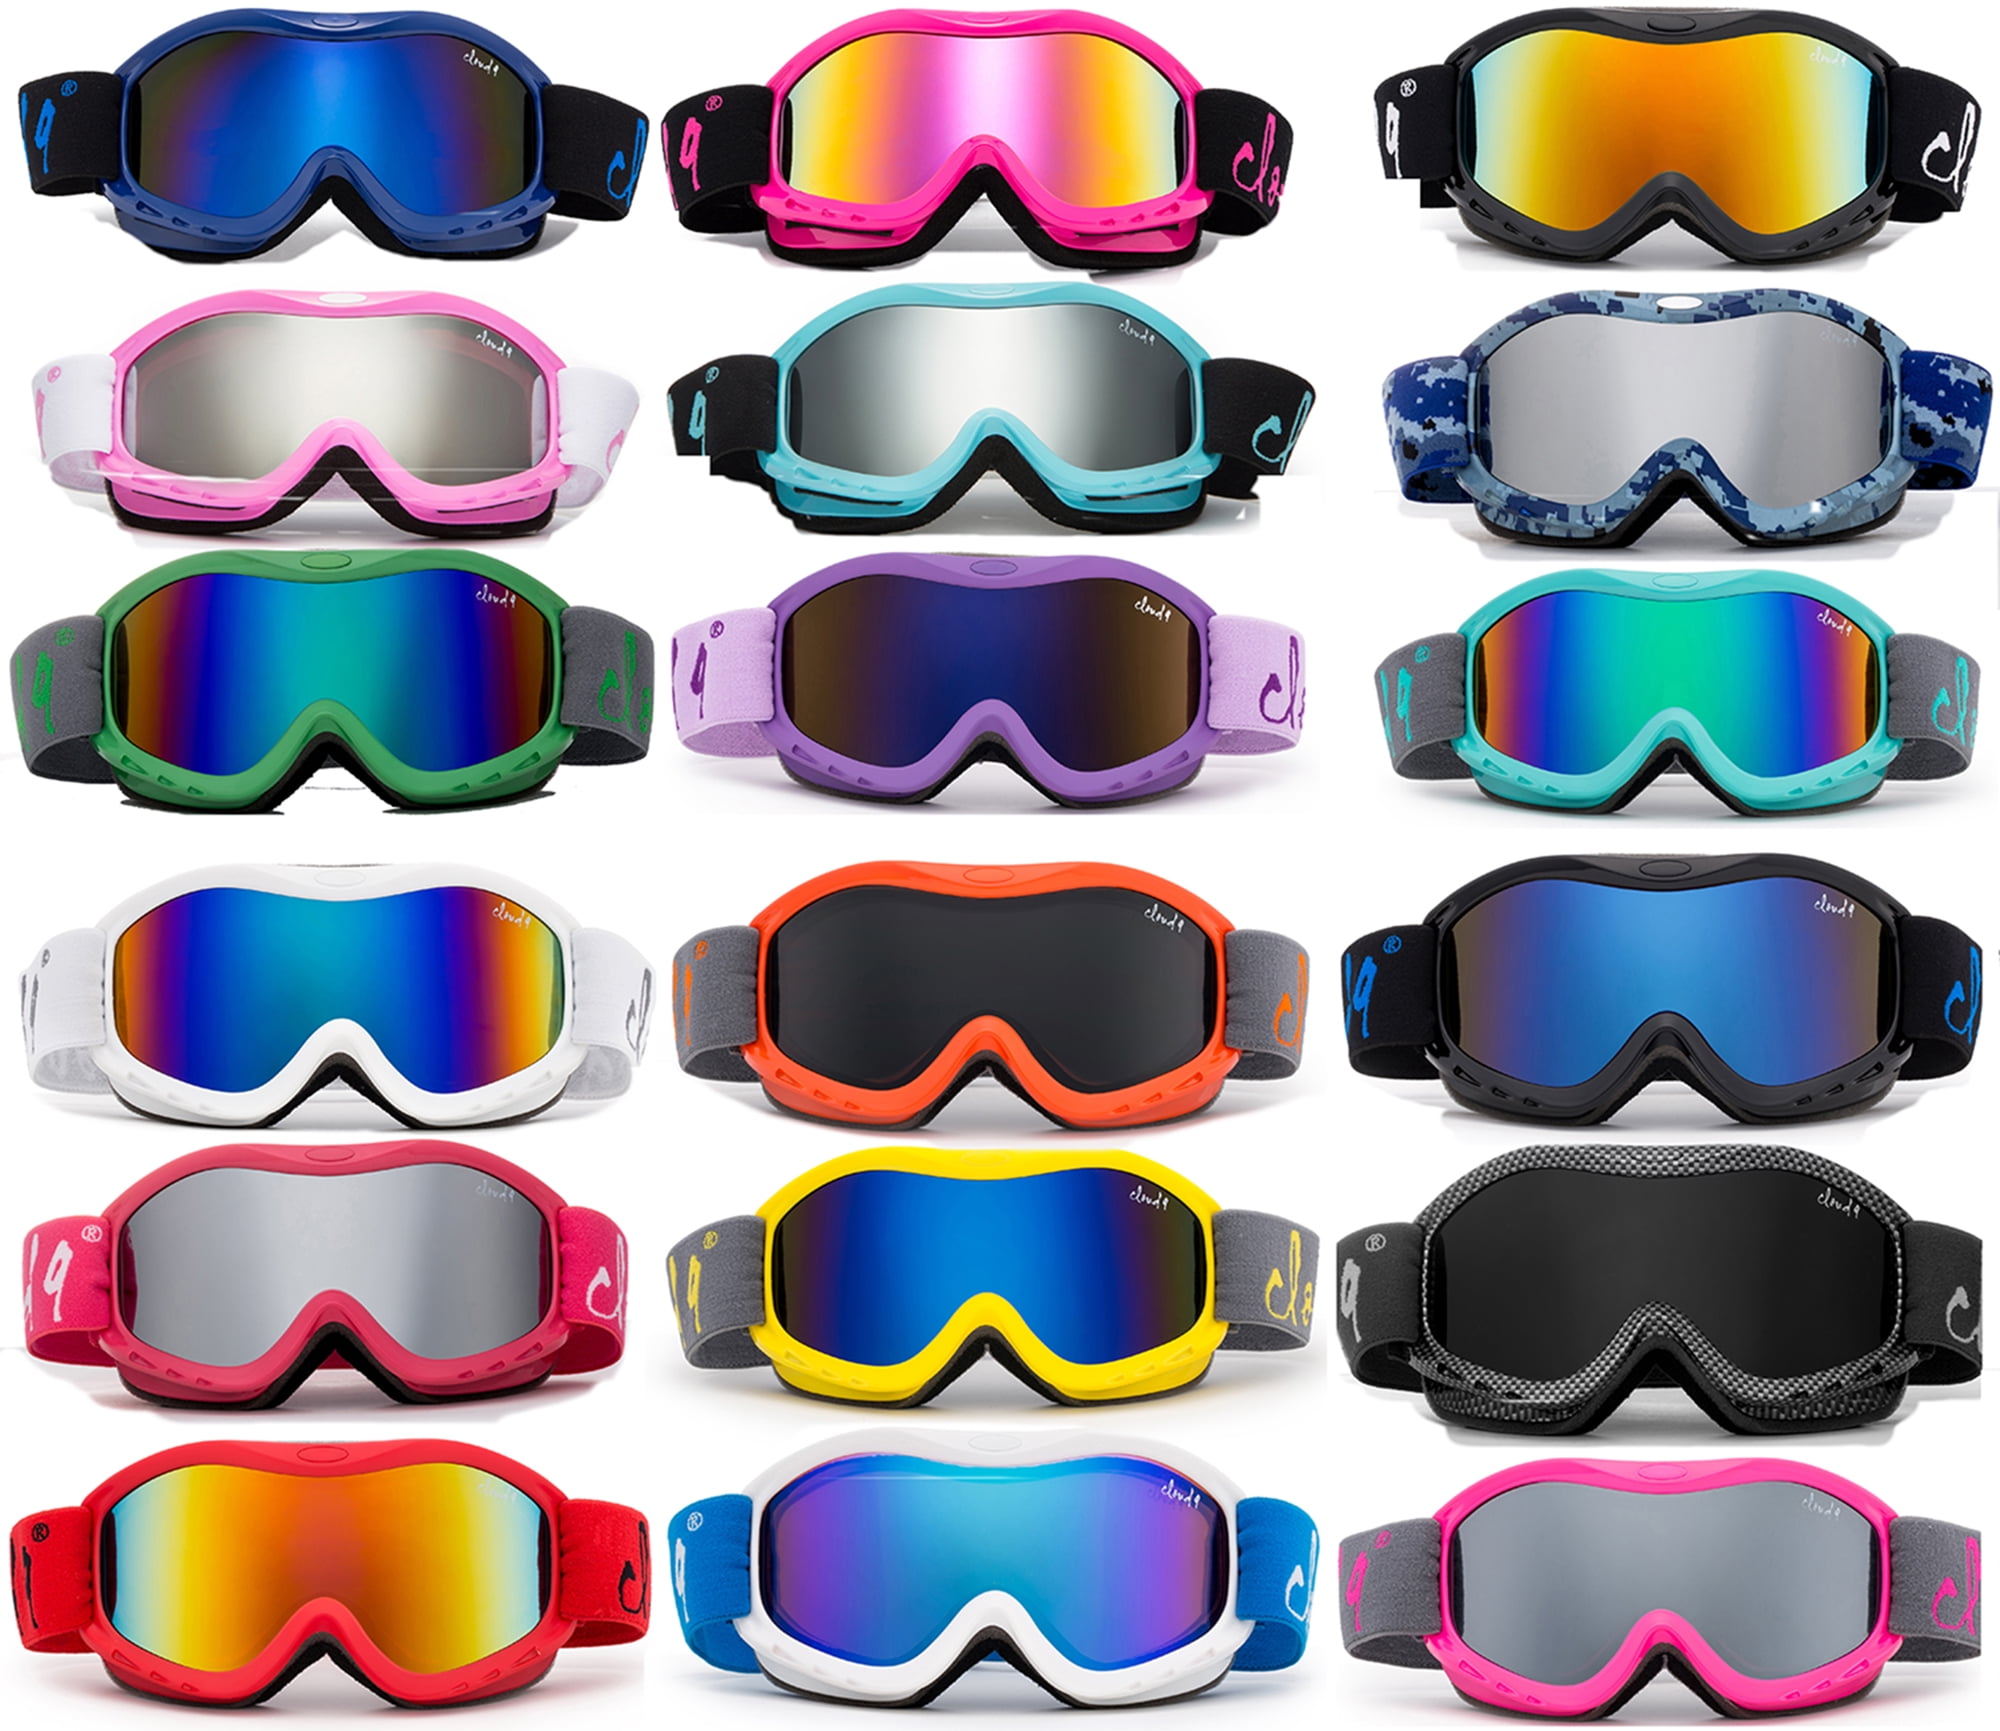 Kids Skiing Goggles Glasses Anti-Fog UV Lens Wind resistant Snow Junior Goggles 